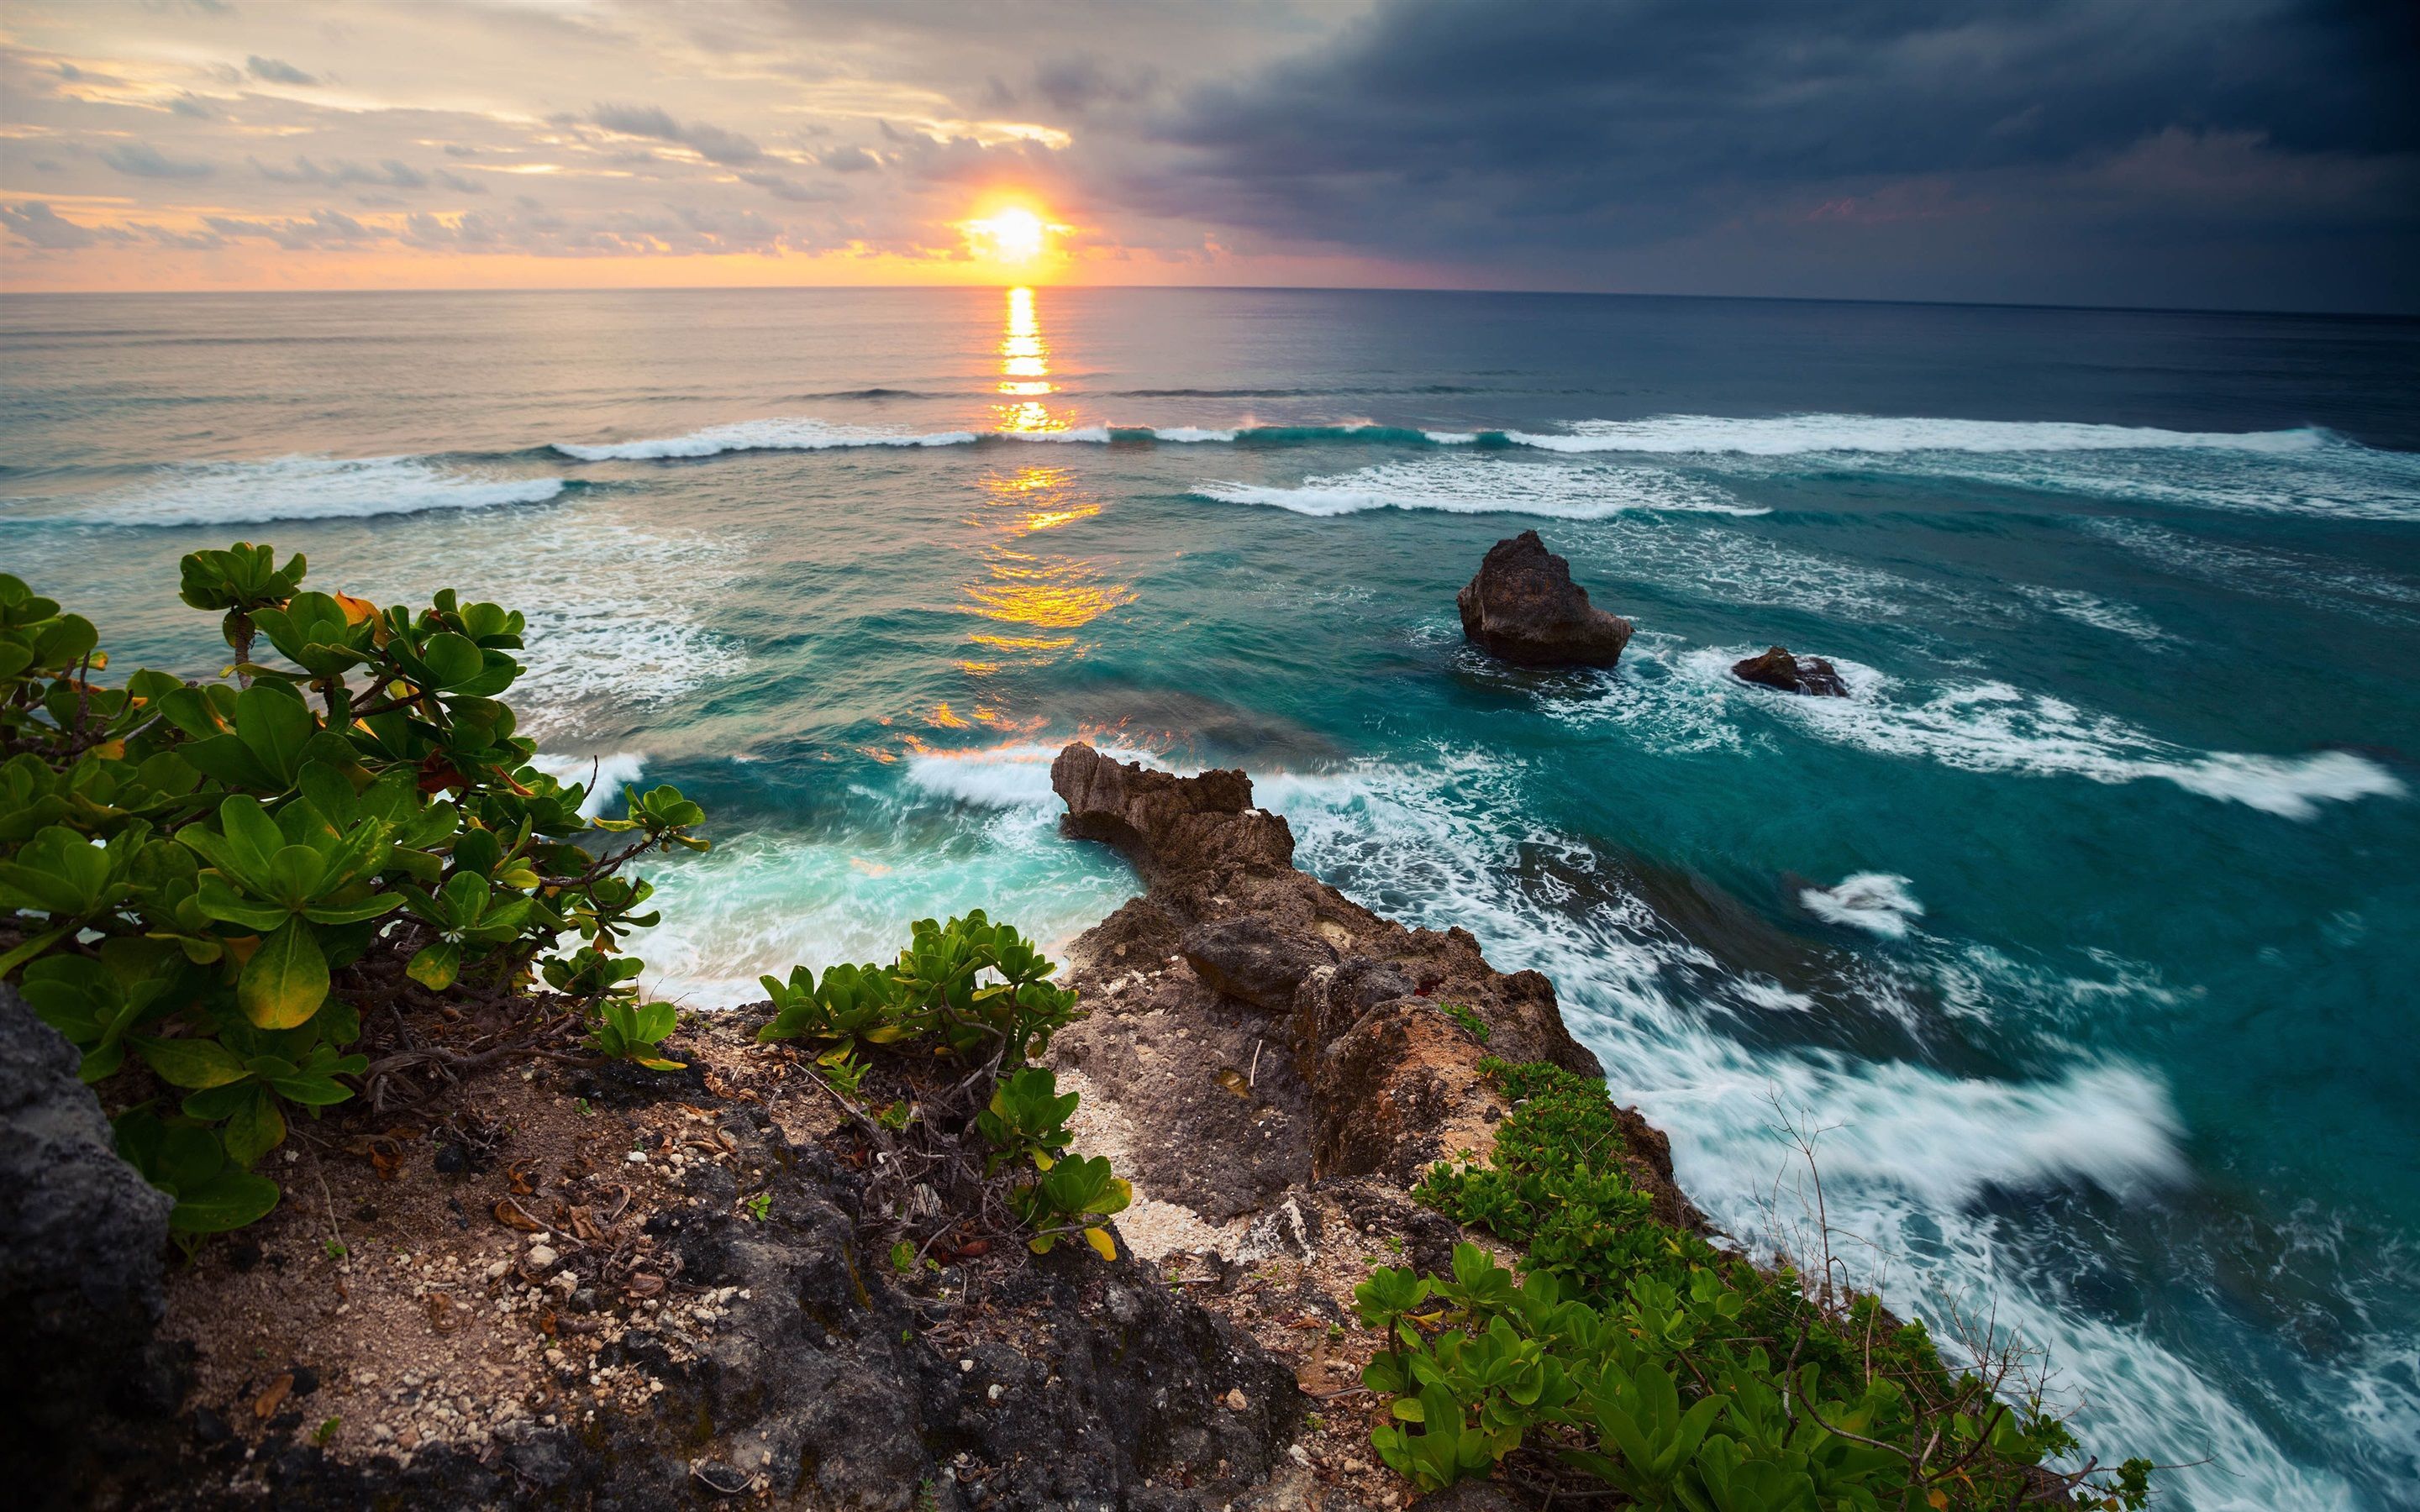  Bali Hintergrundbild 2880x1800. Indonesien, Insel Bali, tropische Natur Landschaft, Meer, Wellen, Sonnenuntergang 3840x2160 UHD 4K Hintergrundbilder, HD, Bild